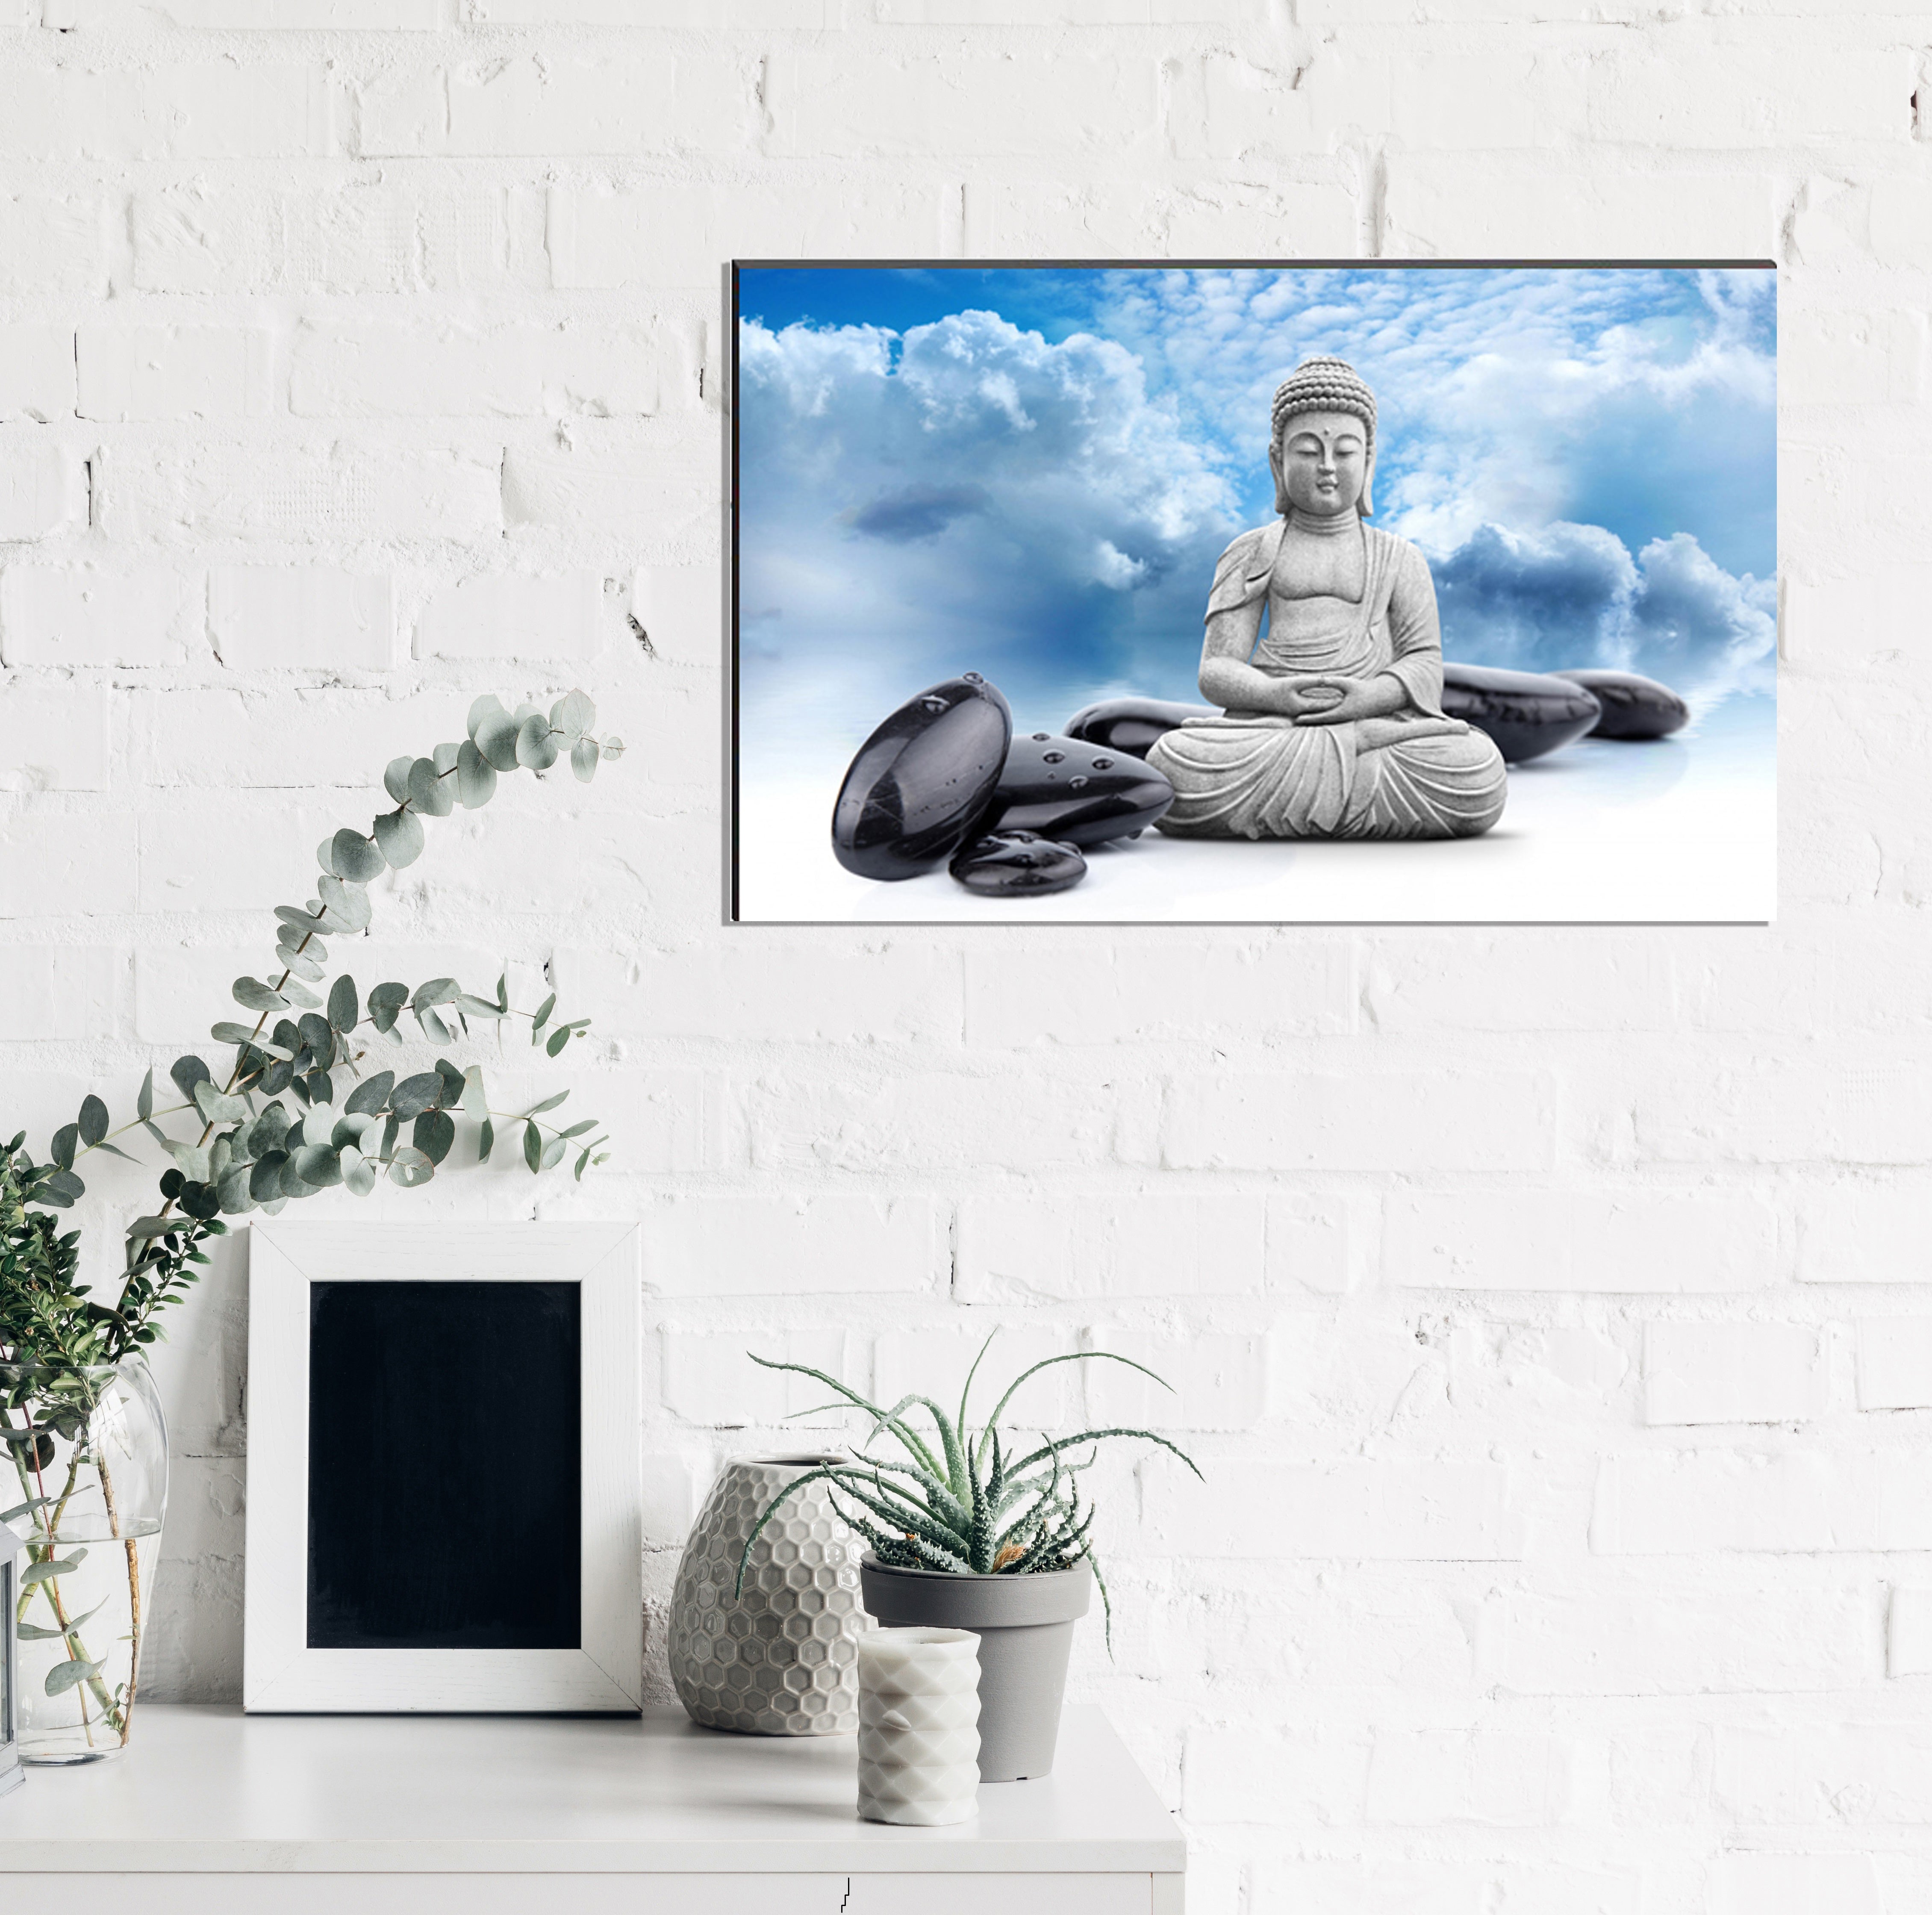 Meditating Buddha Painting Digital Printed Religious Wall Art 1